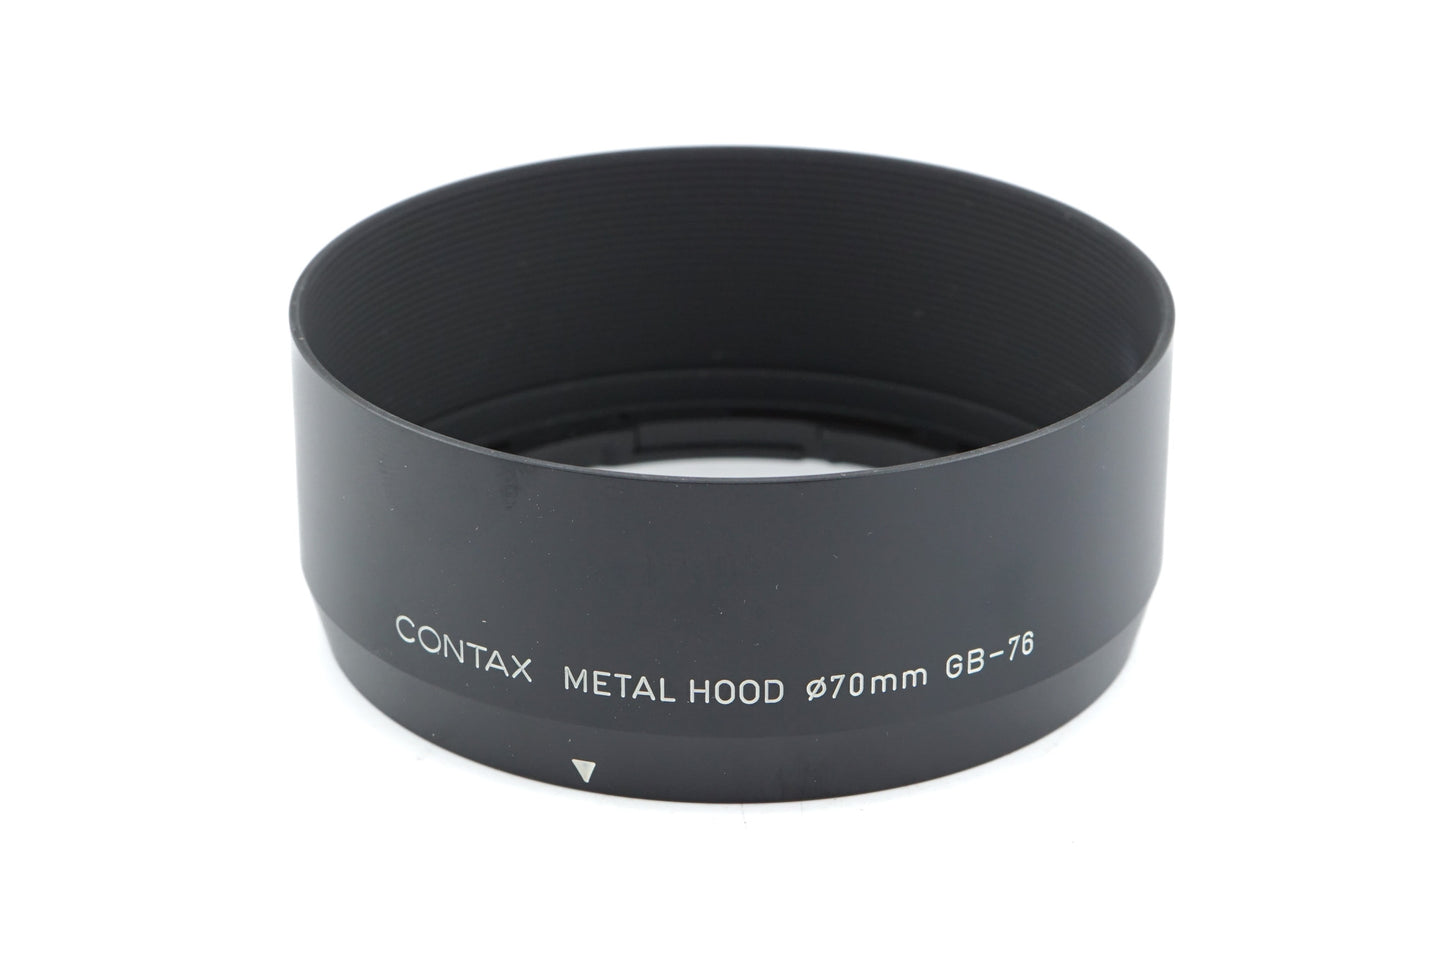 Contax Metal Hood GB-76 - Accessory